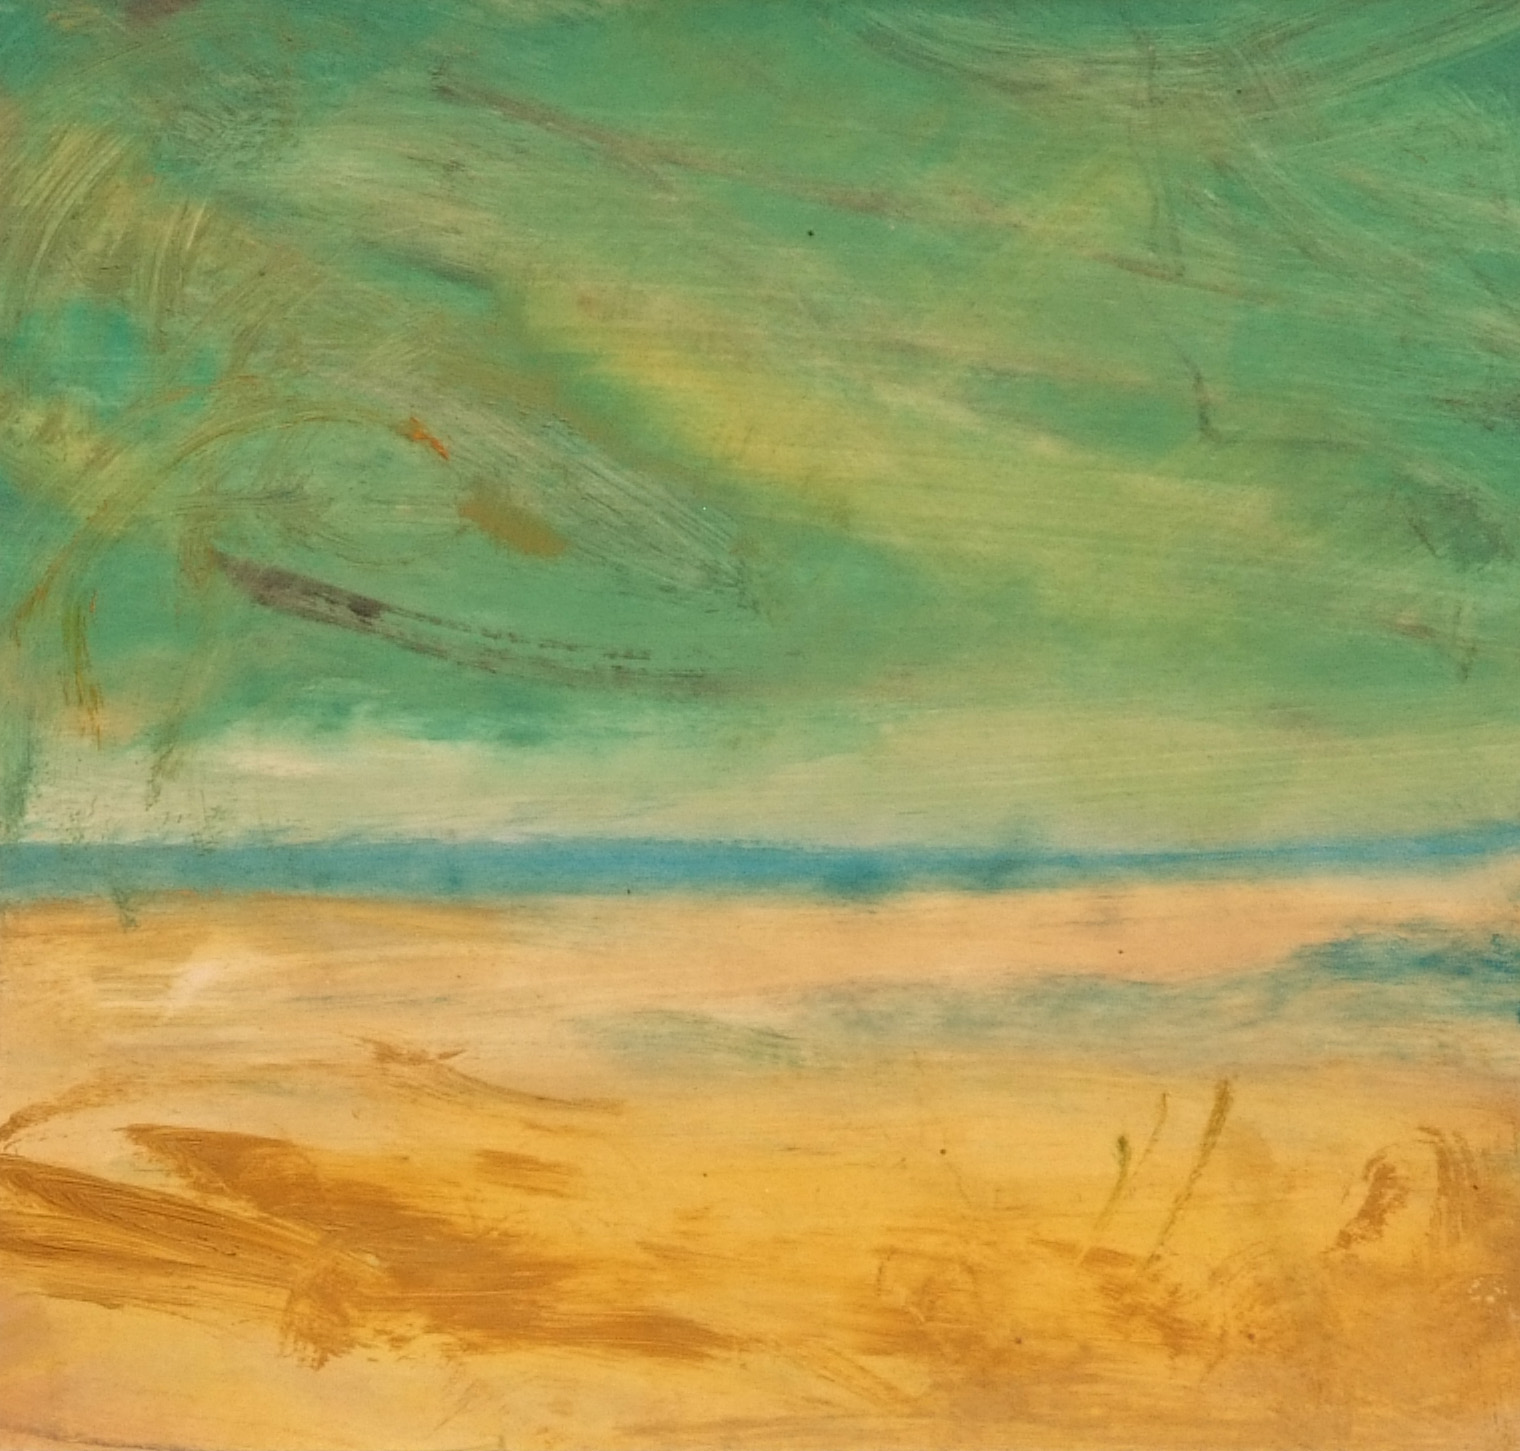 *Gerhard van der Grinten, (German, born 1966,) pink/green abstracts,three oils on paper in one - Image 2 of 2